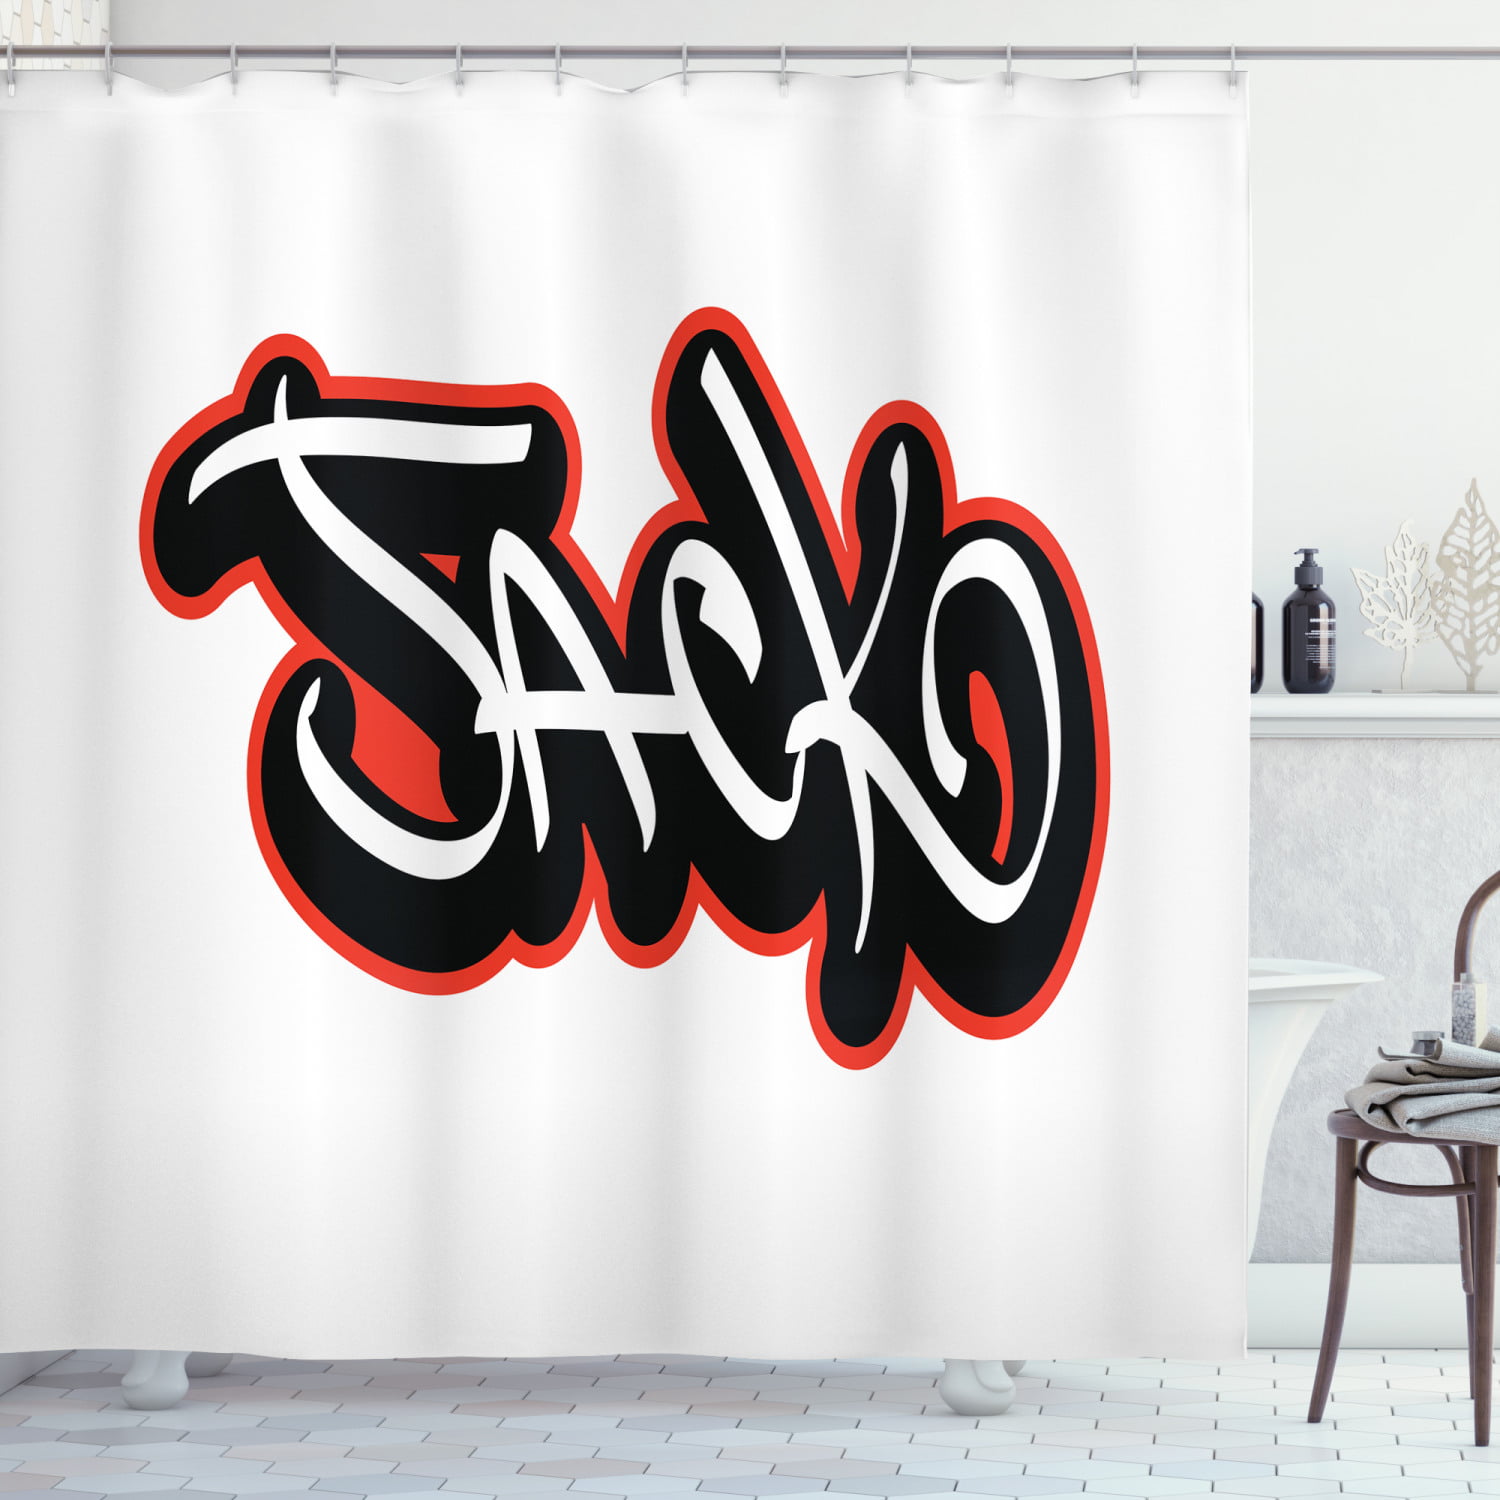 Fabric Waterproof Bathroom Shower Curtain Decor Hooks Set Hip Hop Art Graffiti 